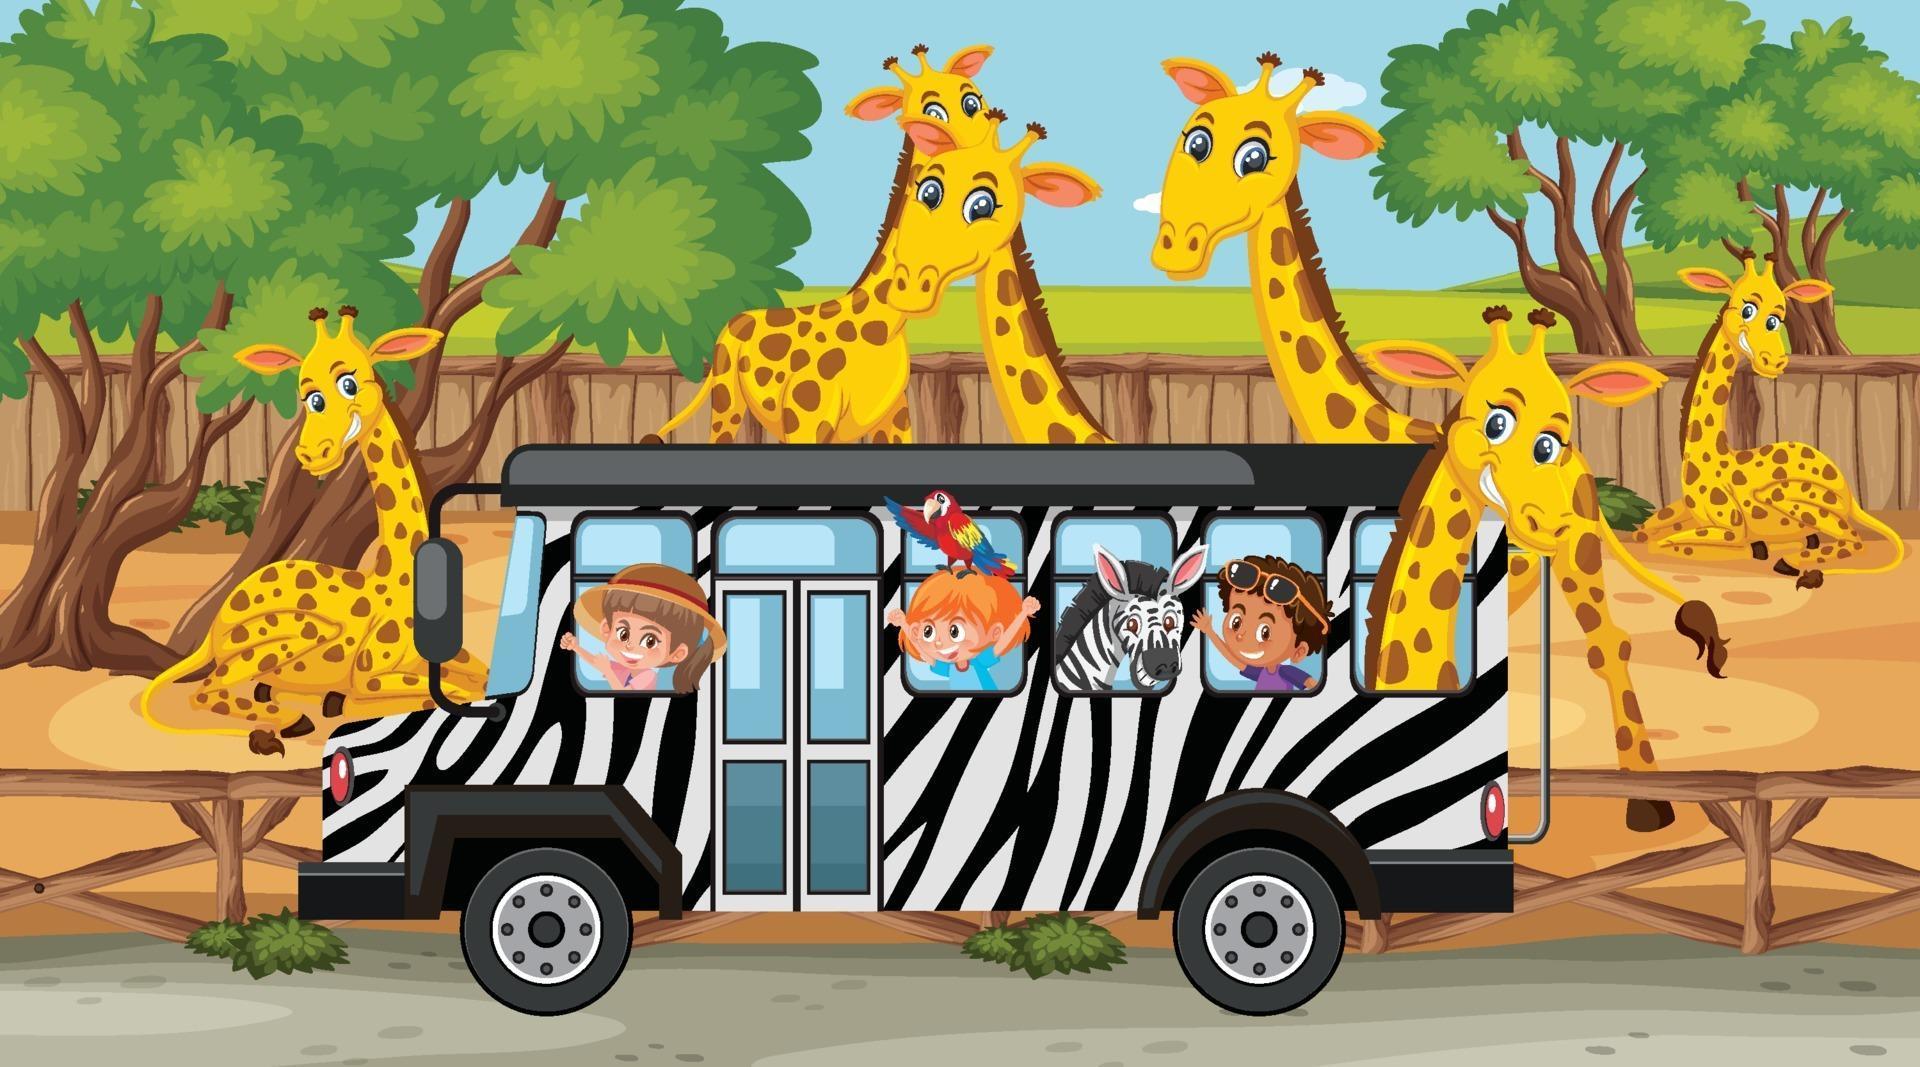 Safari scene with many giraffes and kids on tourist bus 2301534 Vector